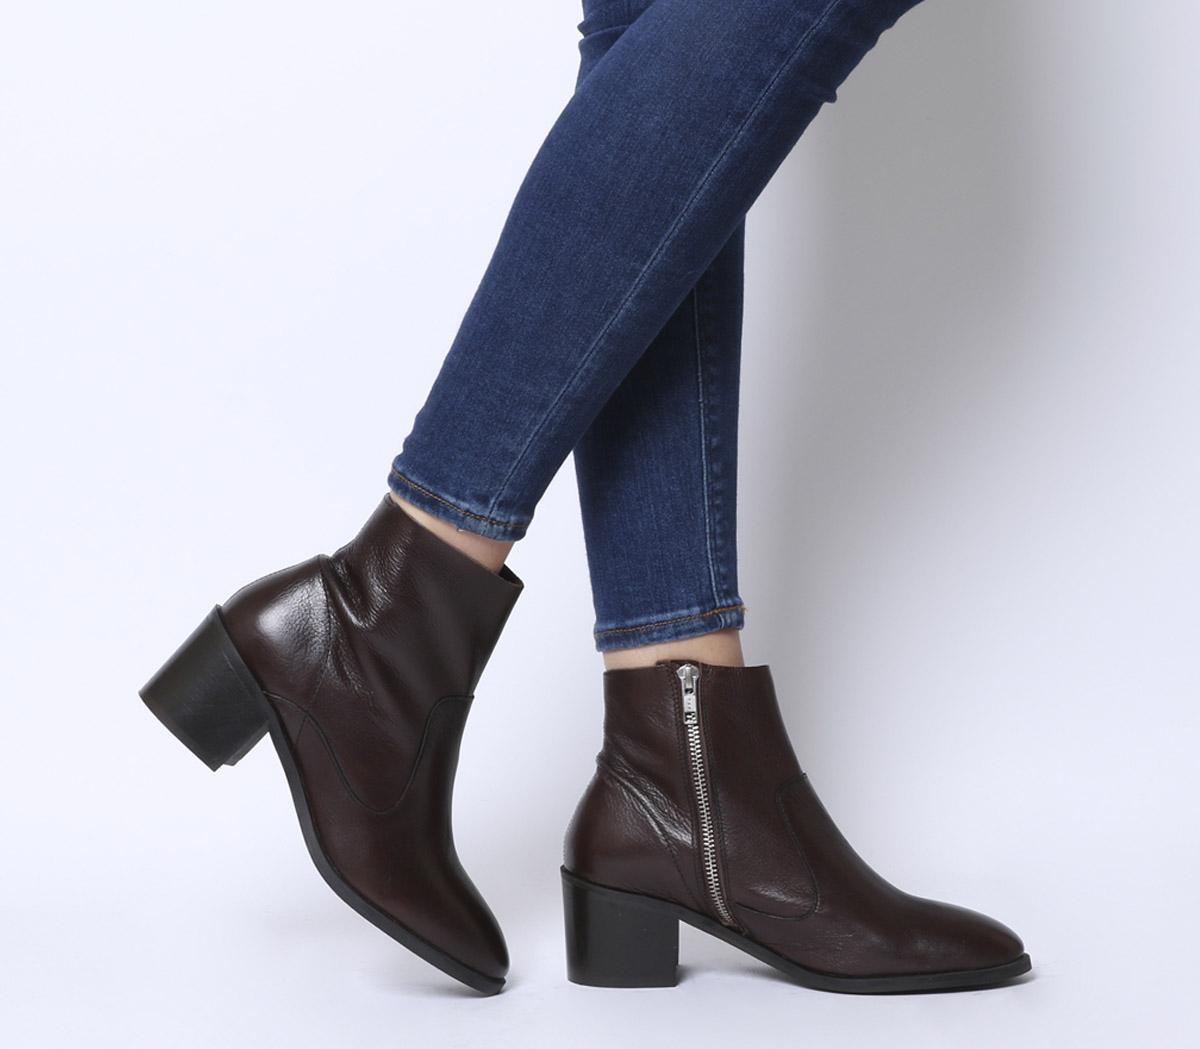 OFFICEAlford Unlined Block Heel BootsBrown Leather